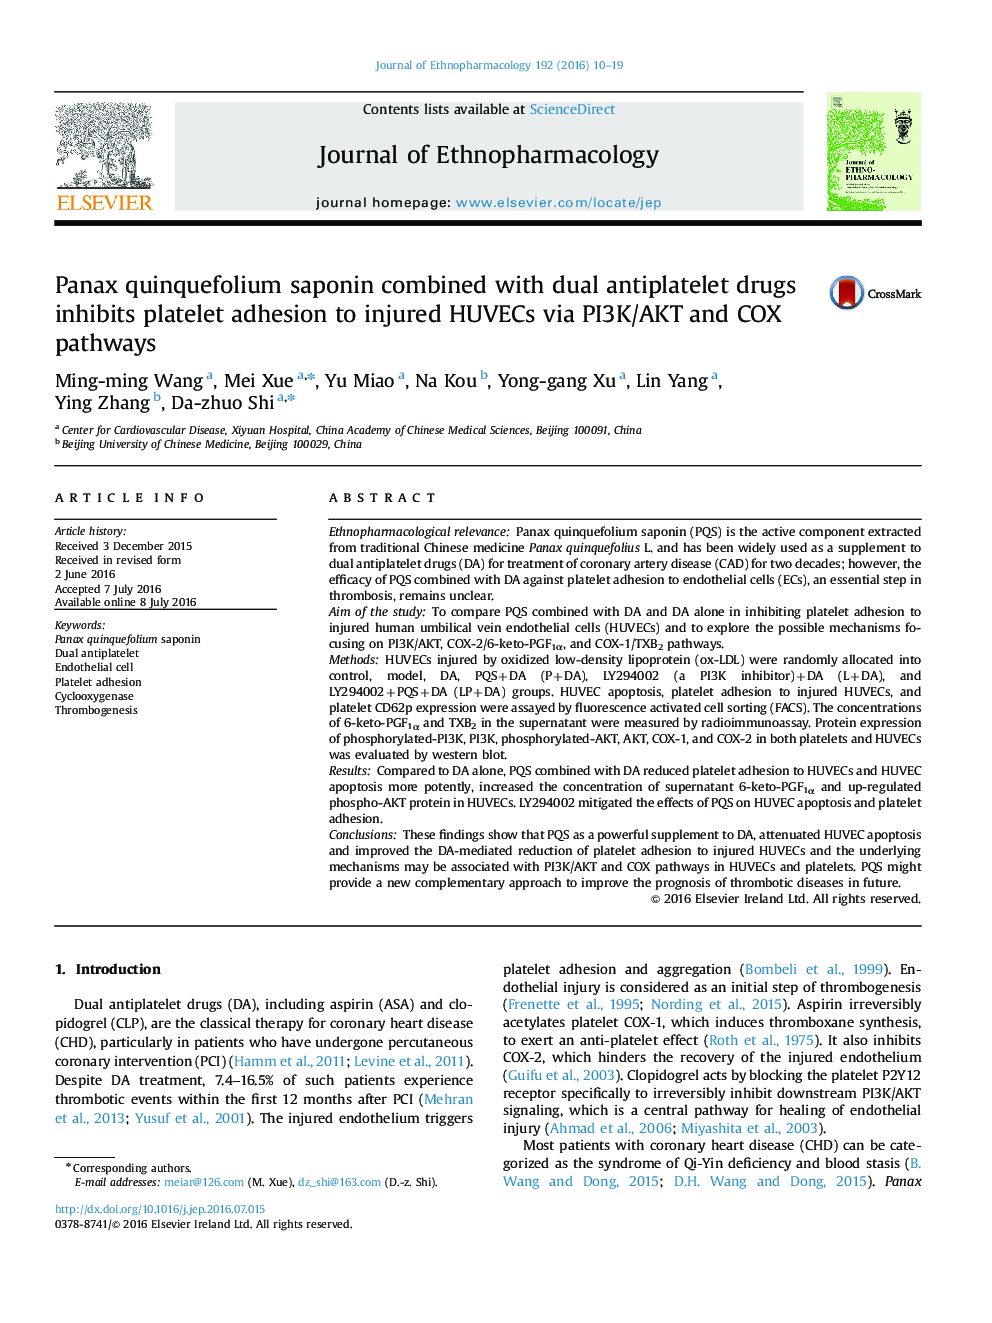 Panax quinquefolium saponin combined with dual antiplatelet drugs inhibits platelet adhesion to injured HUVECs via PI3K/AKT and COX pathways